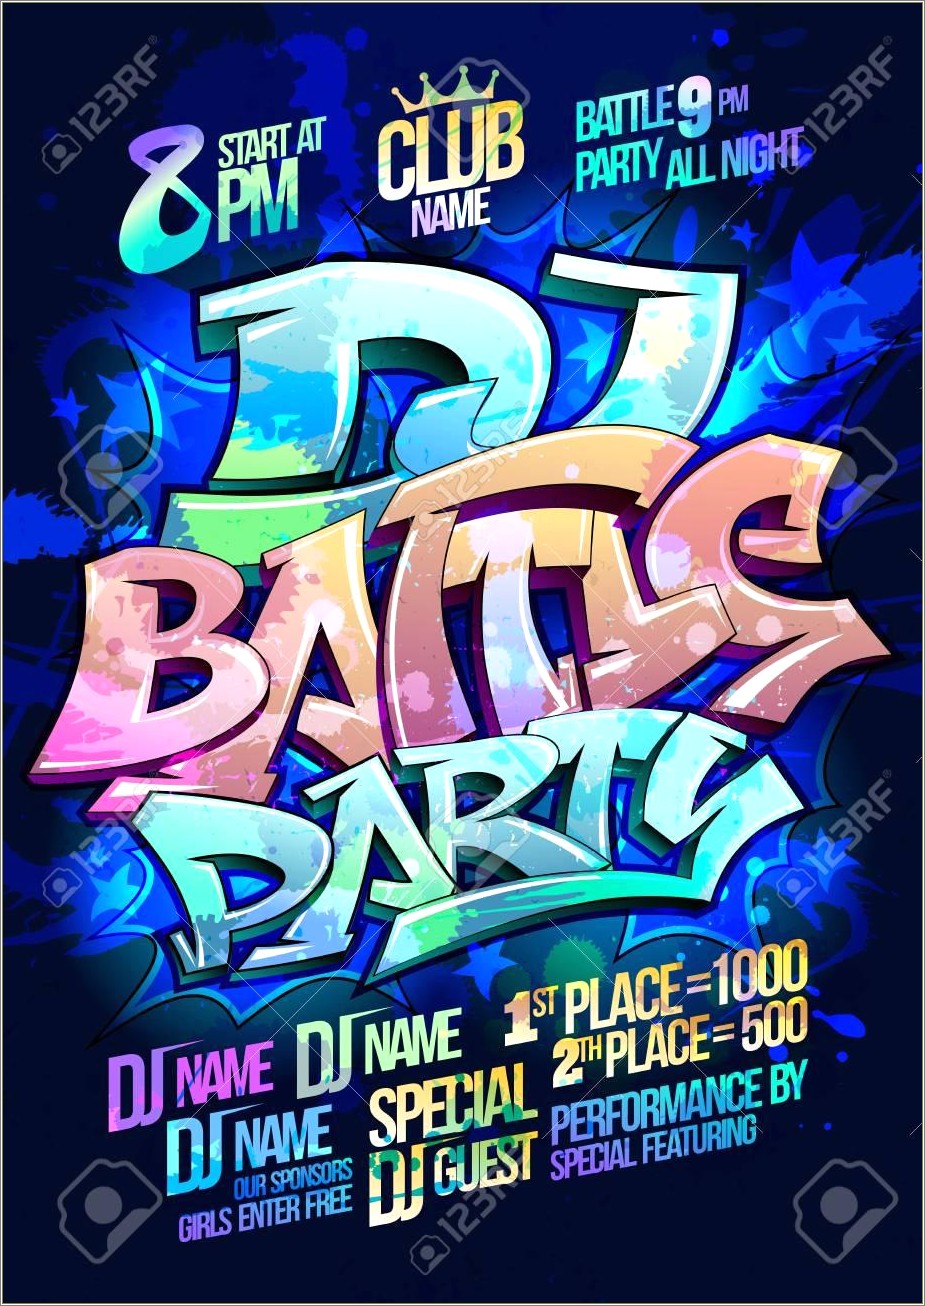 Free Hip Hop Battle Dj Party Flyer Template